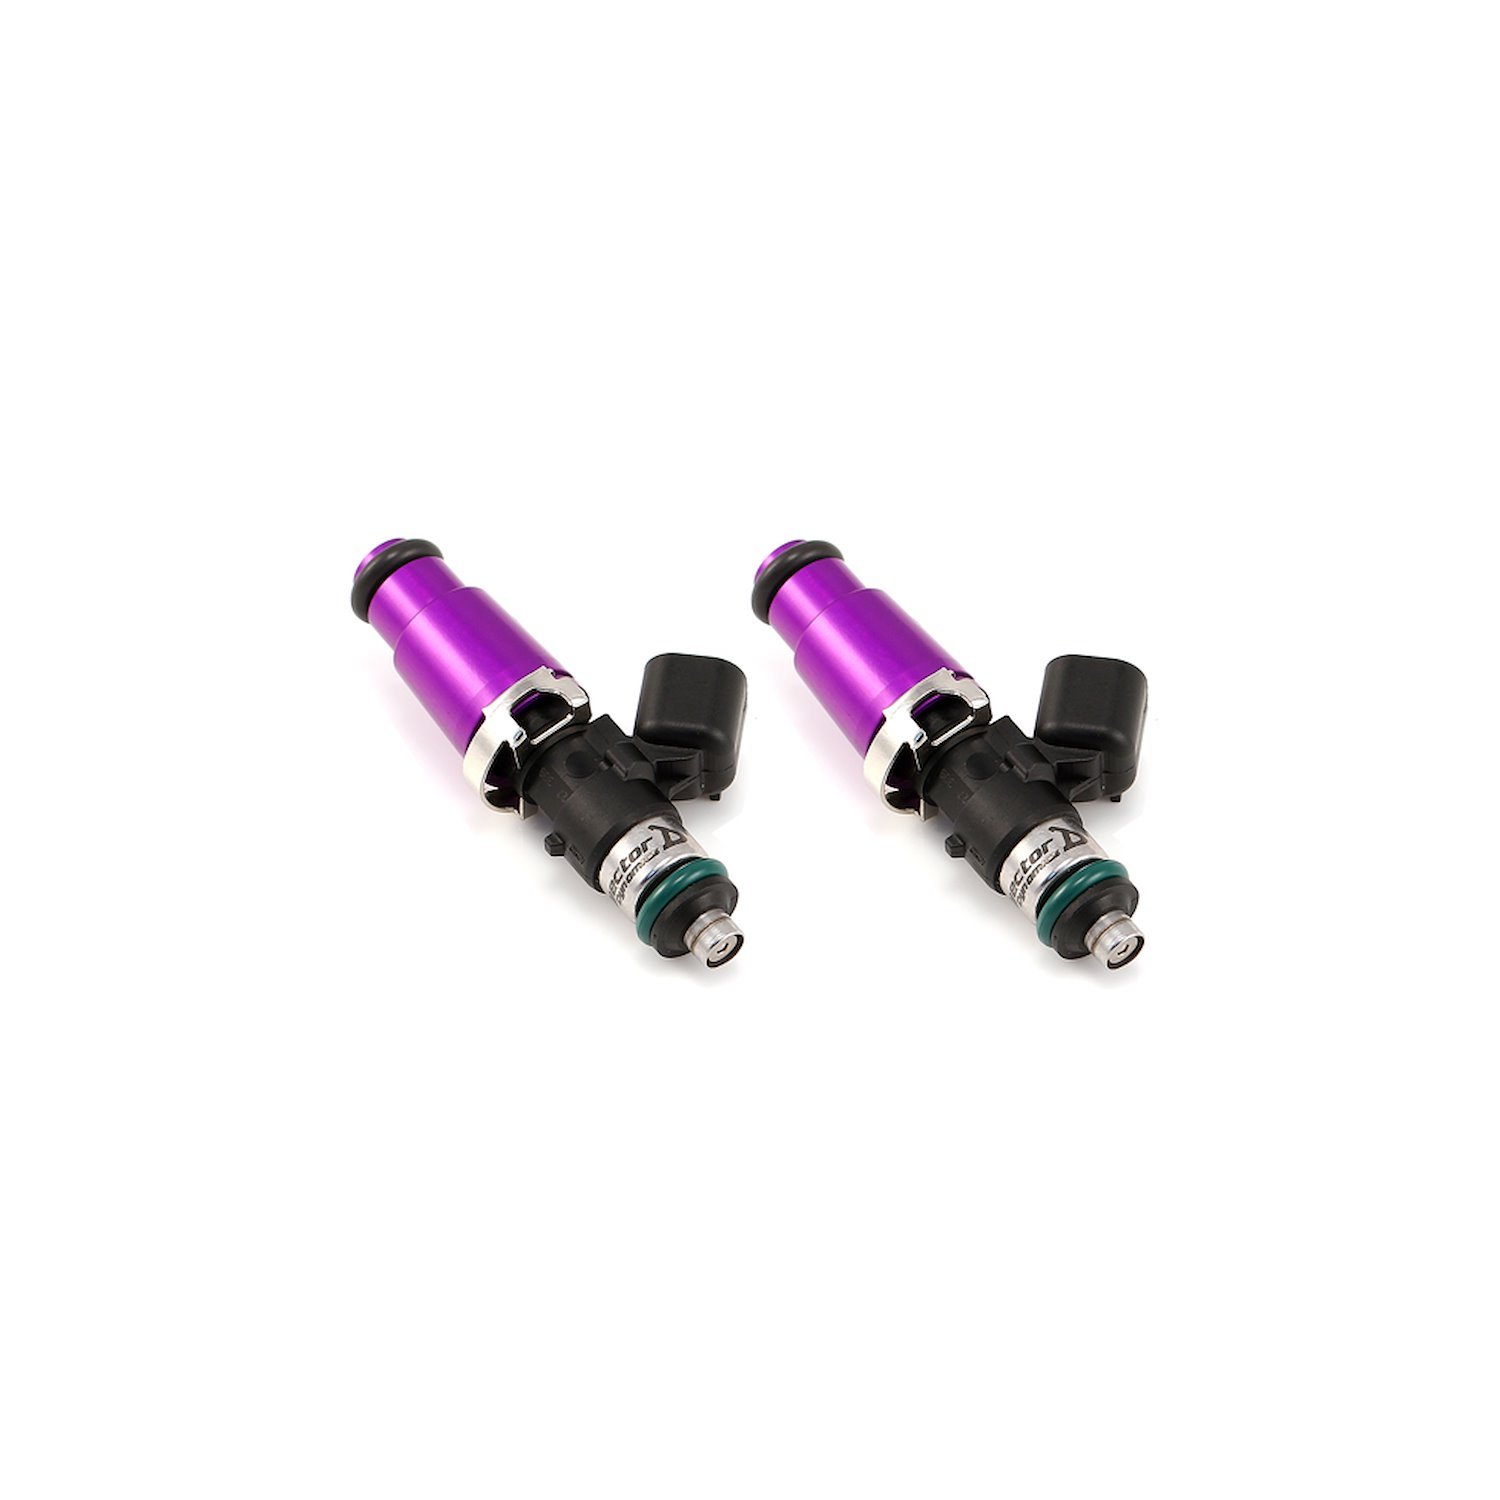 1050.11.06.60.14.2 1050cc Fuel Injector Set, 14 mm (Purple) Adaptors -204 / 14 mm Lower O-Rings